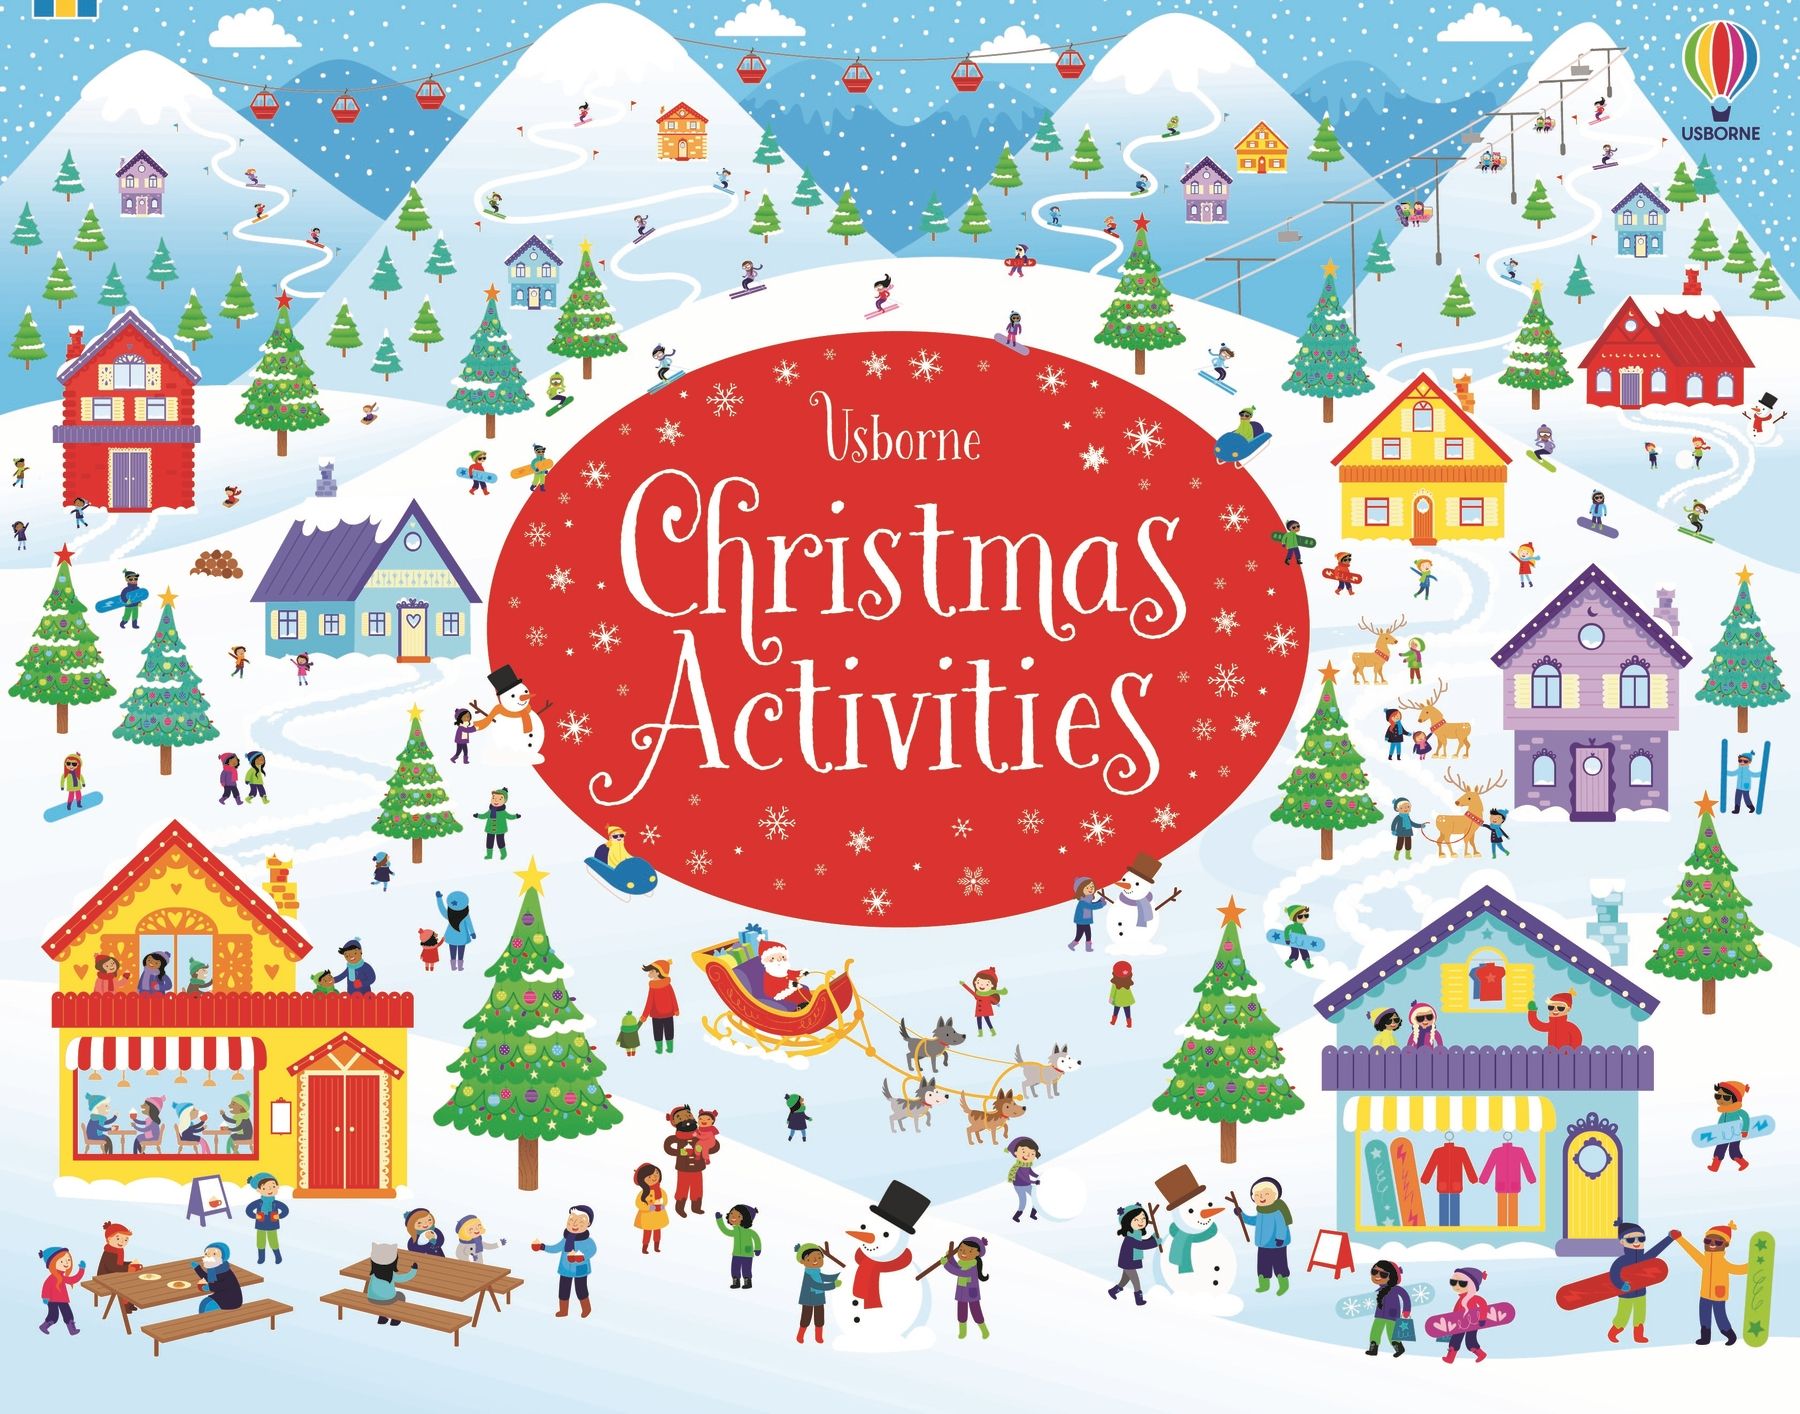 Little Bookworms | Usborne Christmas Activities by Weirs of Baggot Street